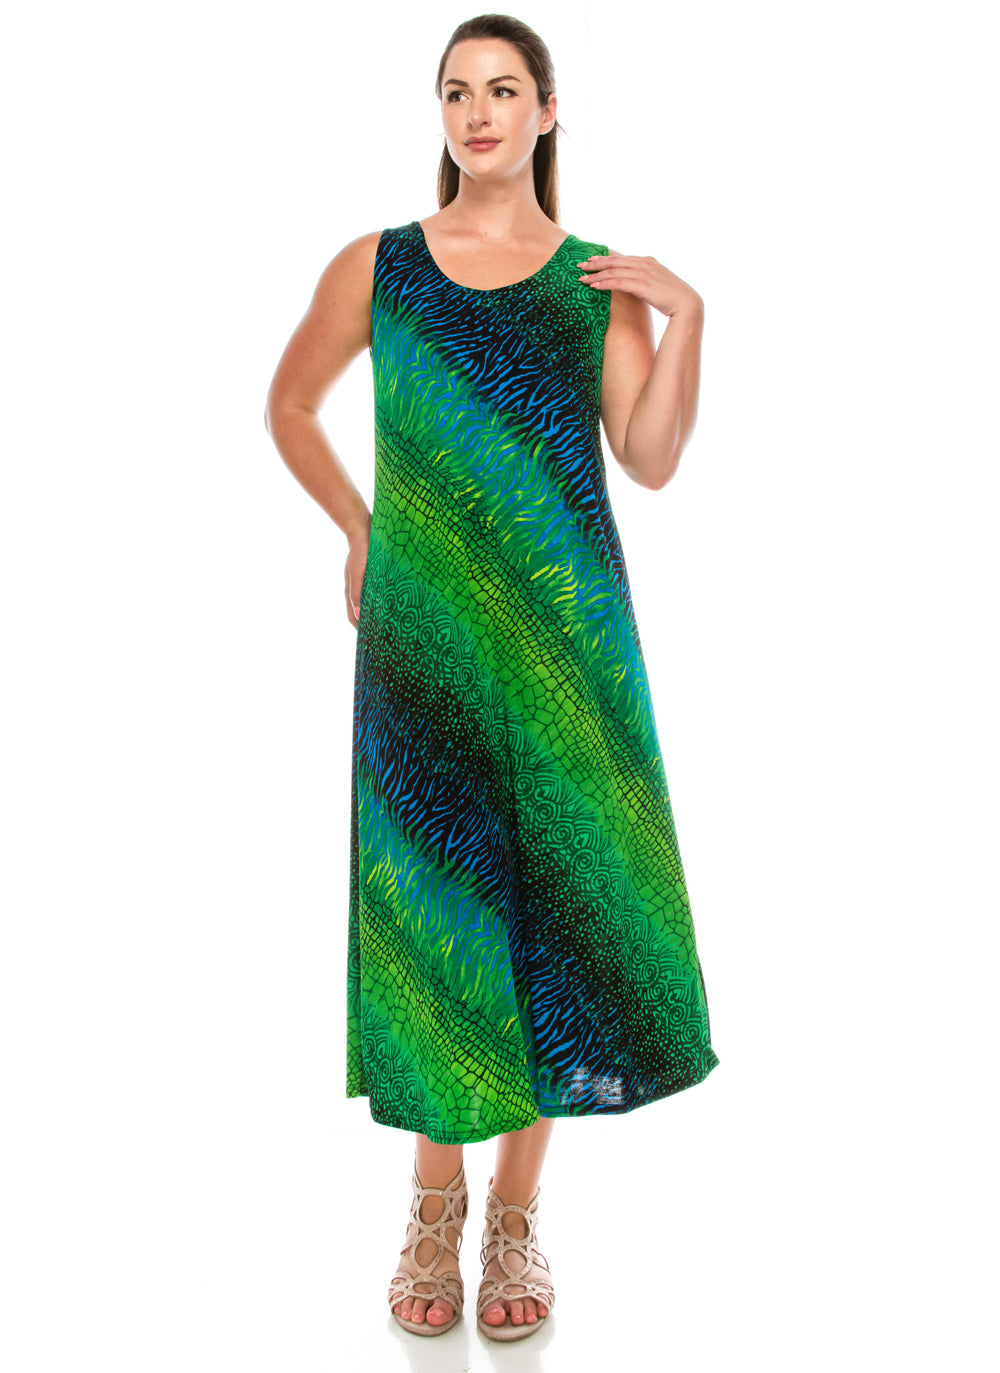 Jostar Women's Stretchy Long Tank Dress Print, 700BN-TP-W182 - Jostar Online